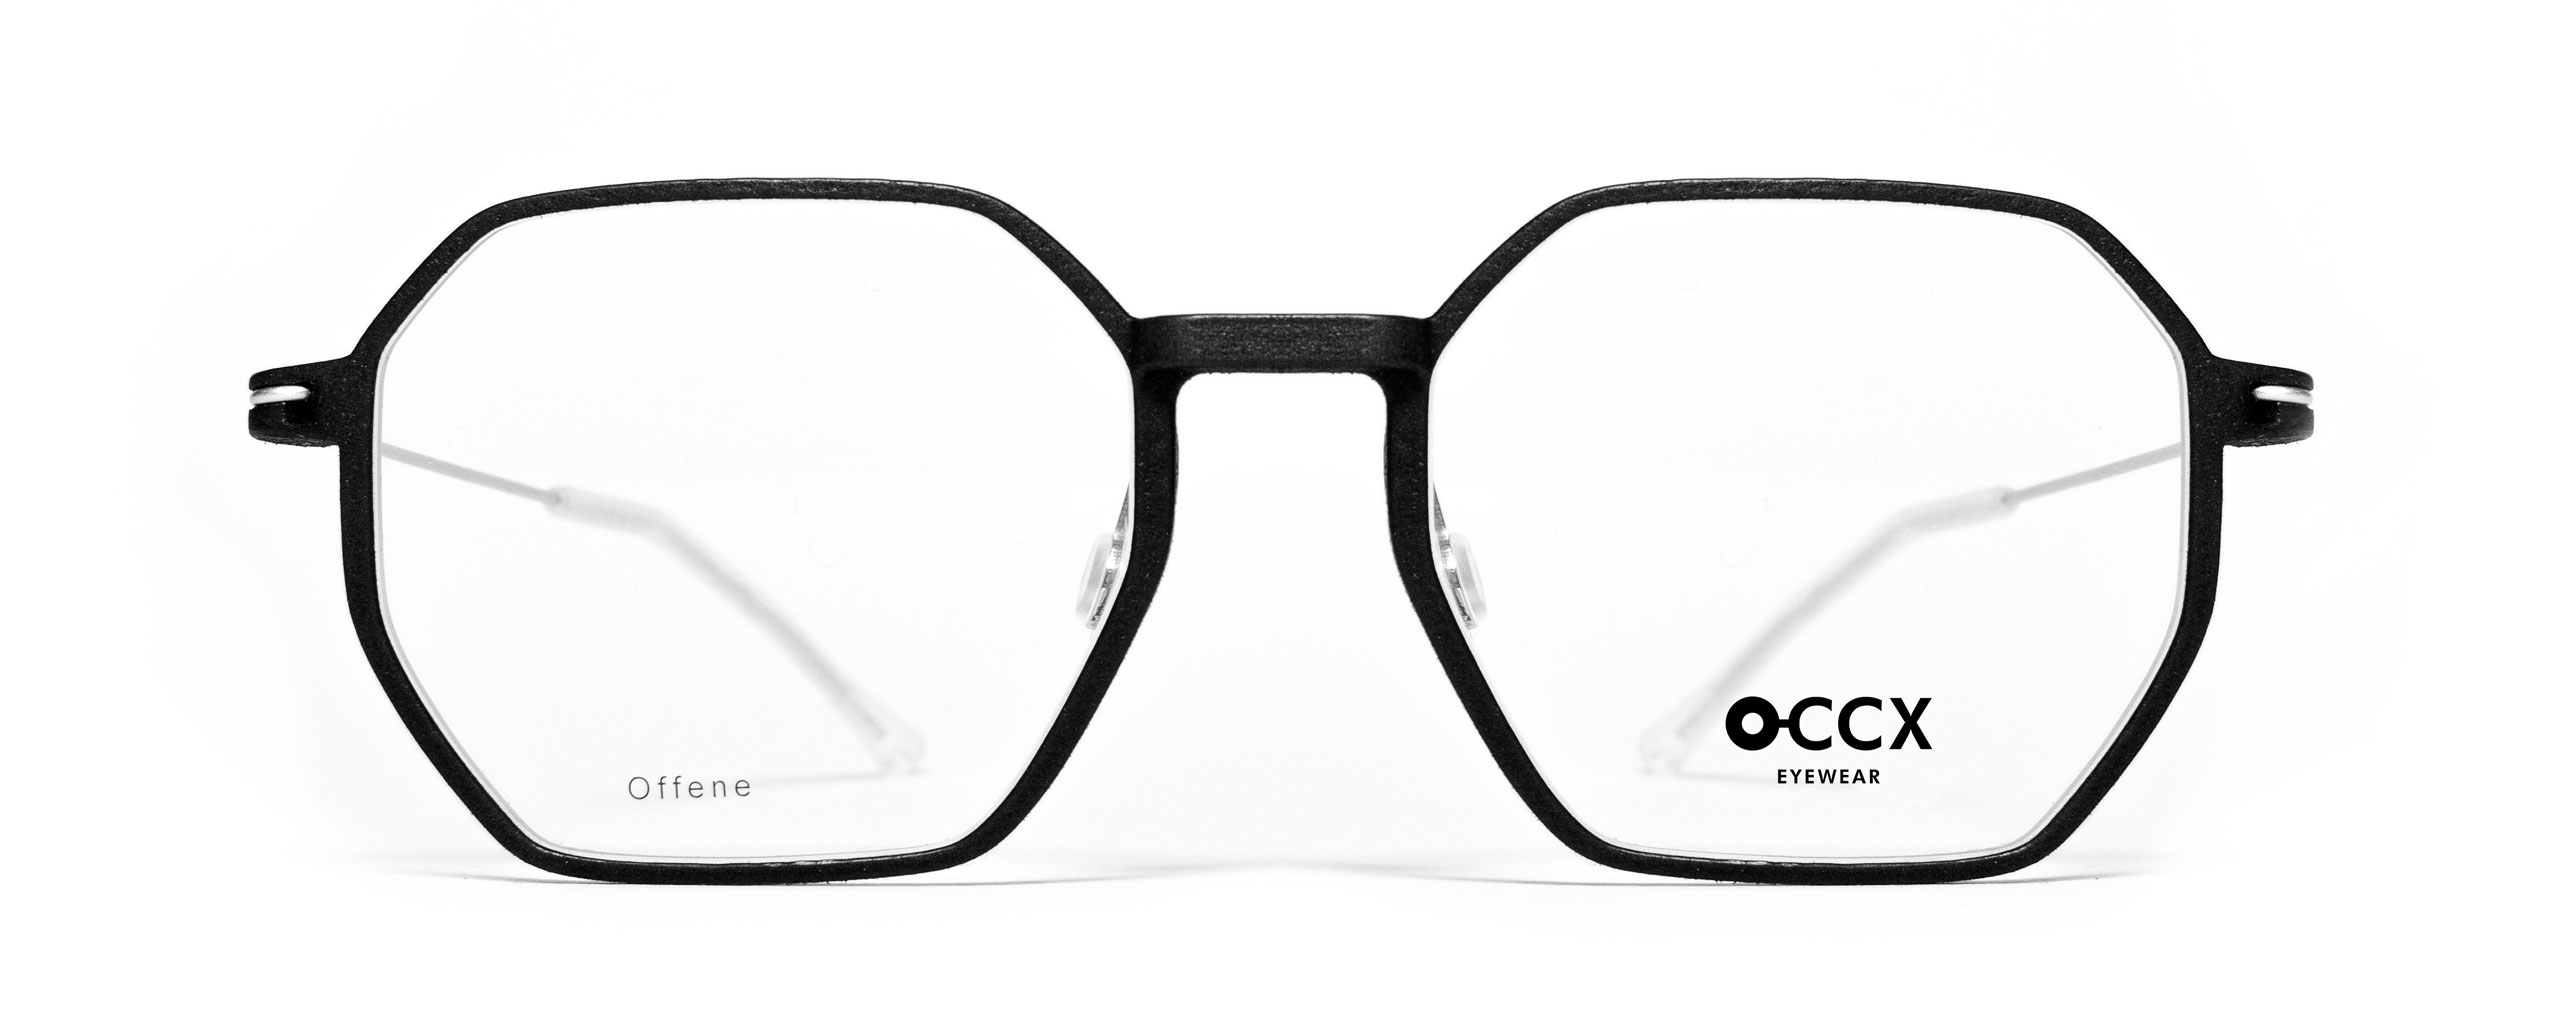 O-CCX Eyewear Slim Offene schiefer